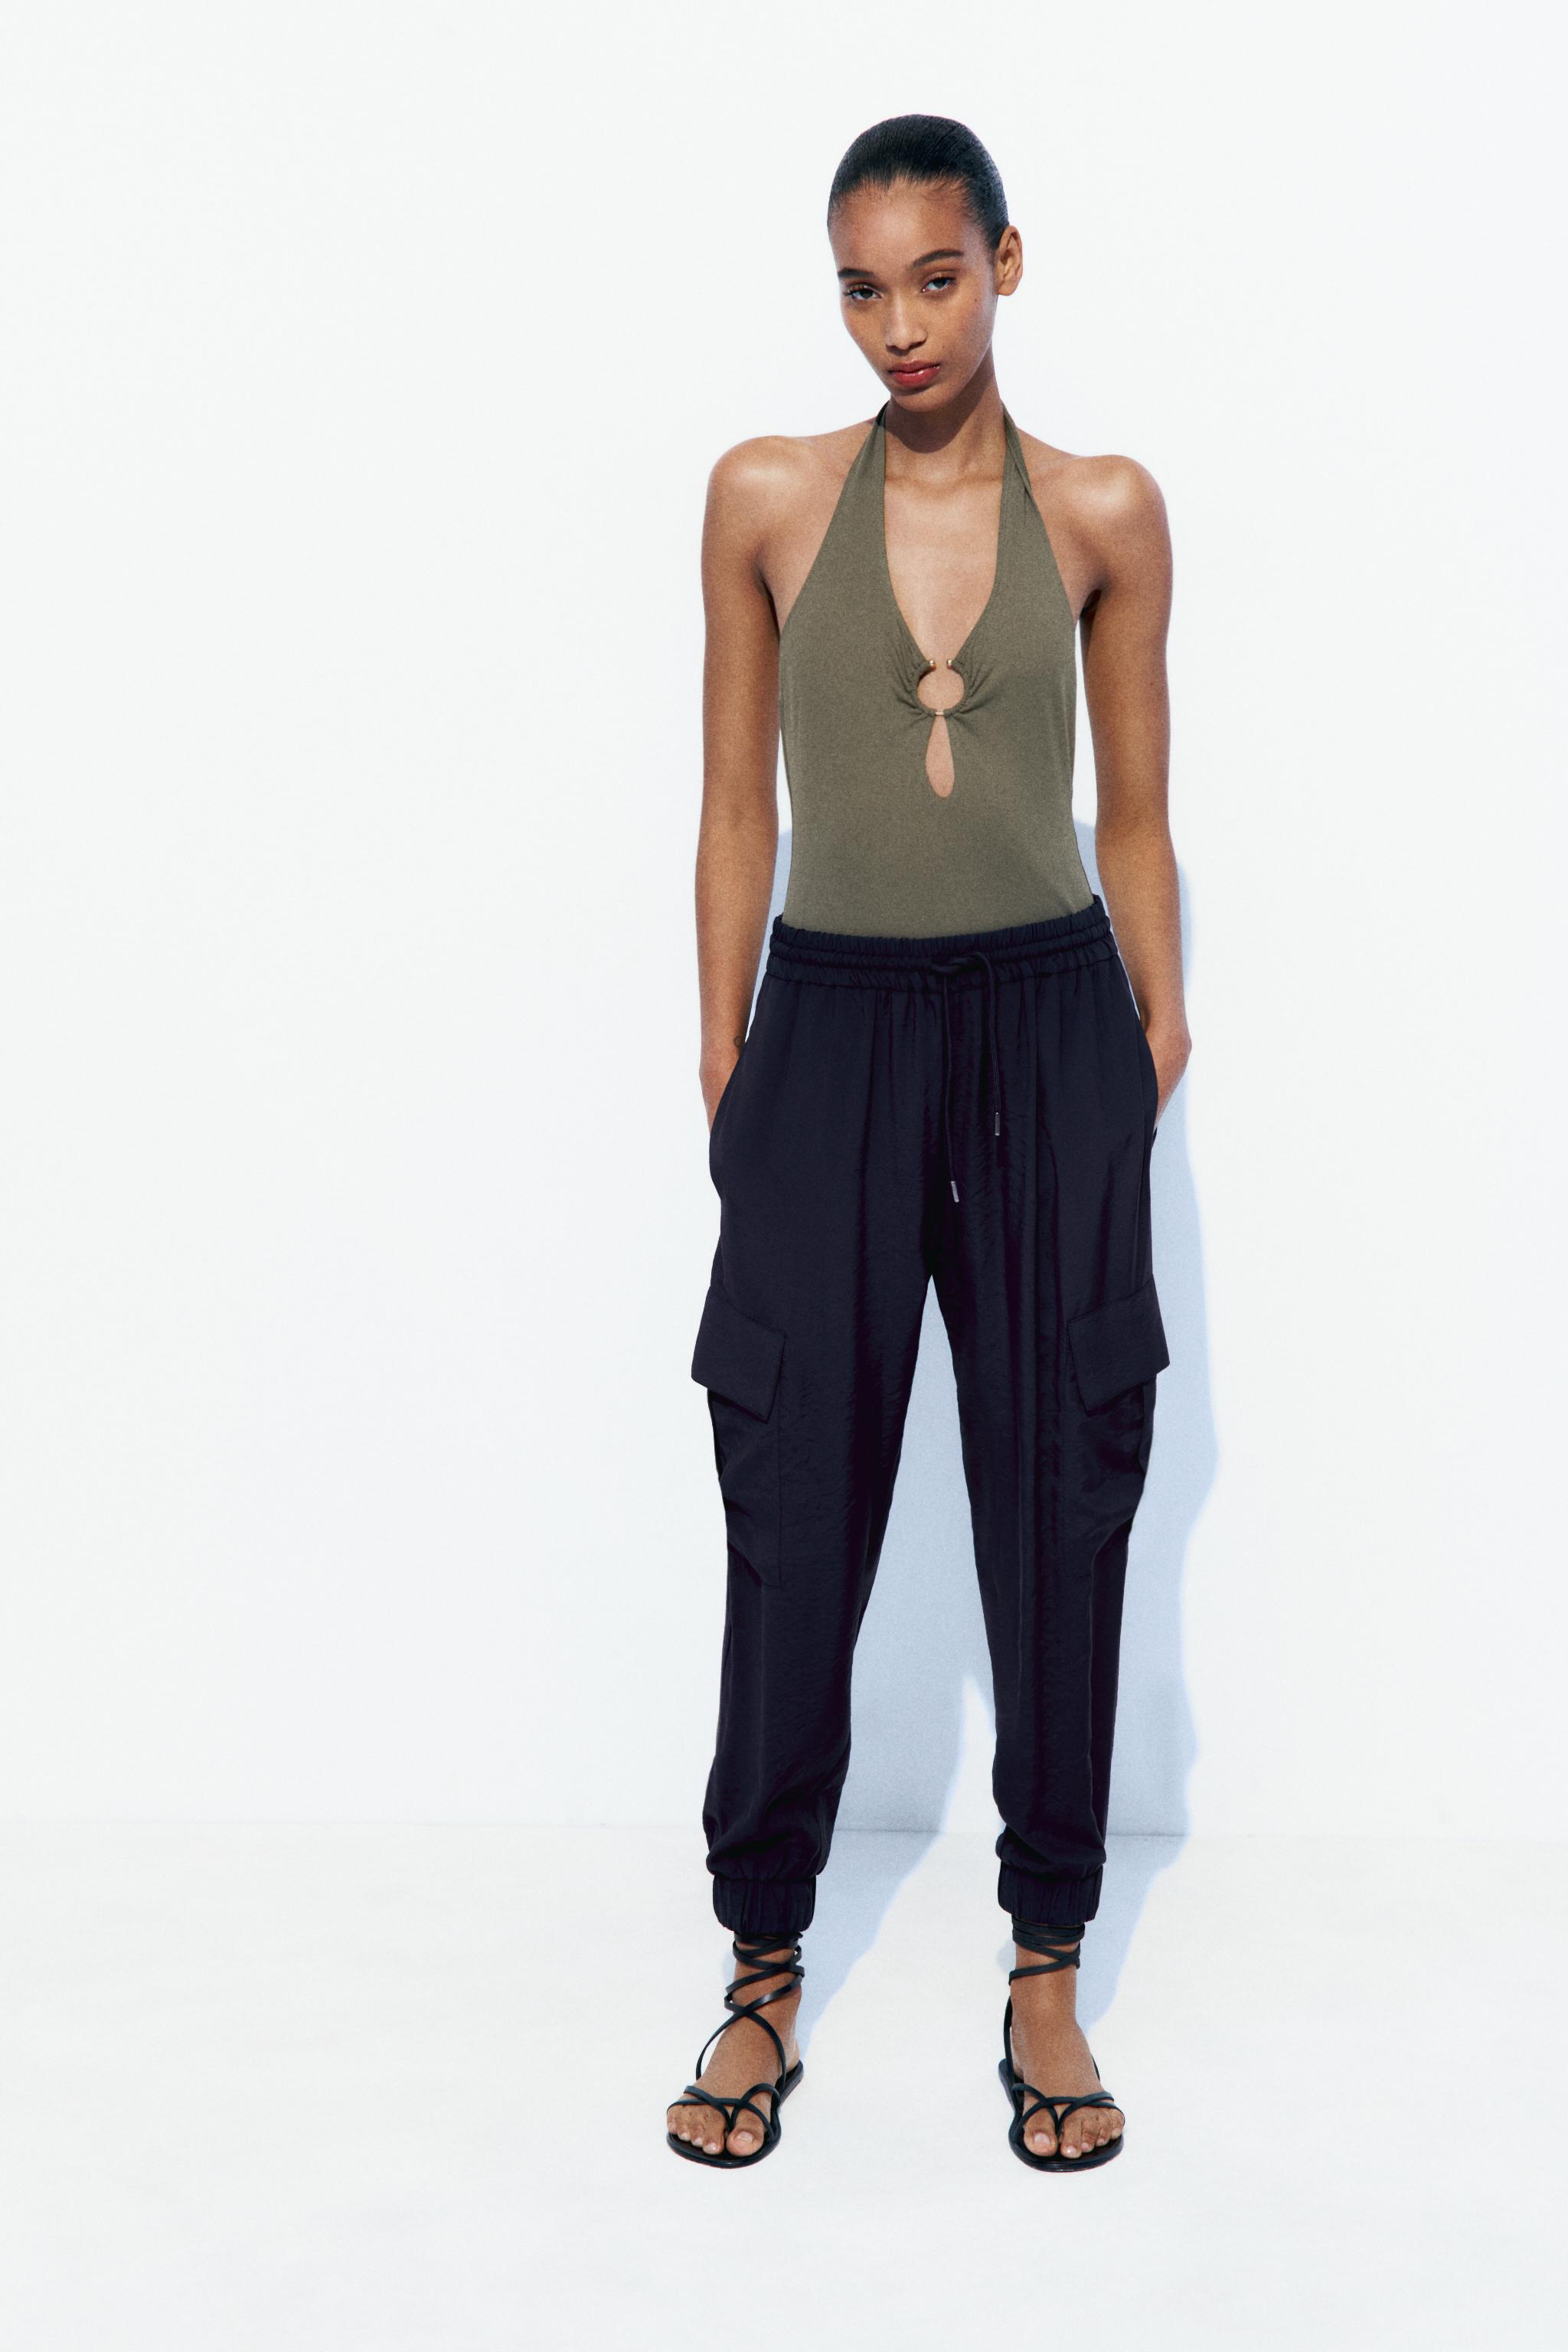 Zara elastic waist pants Size: small (true to size) - Depop